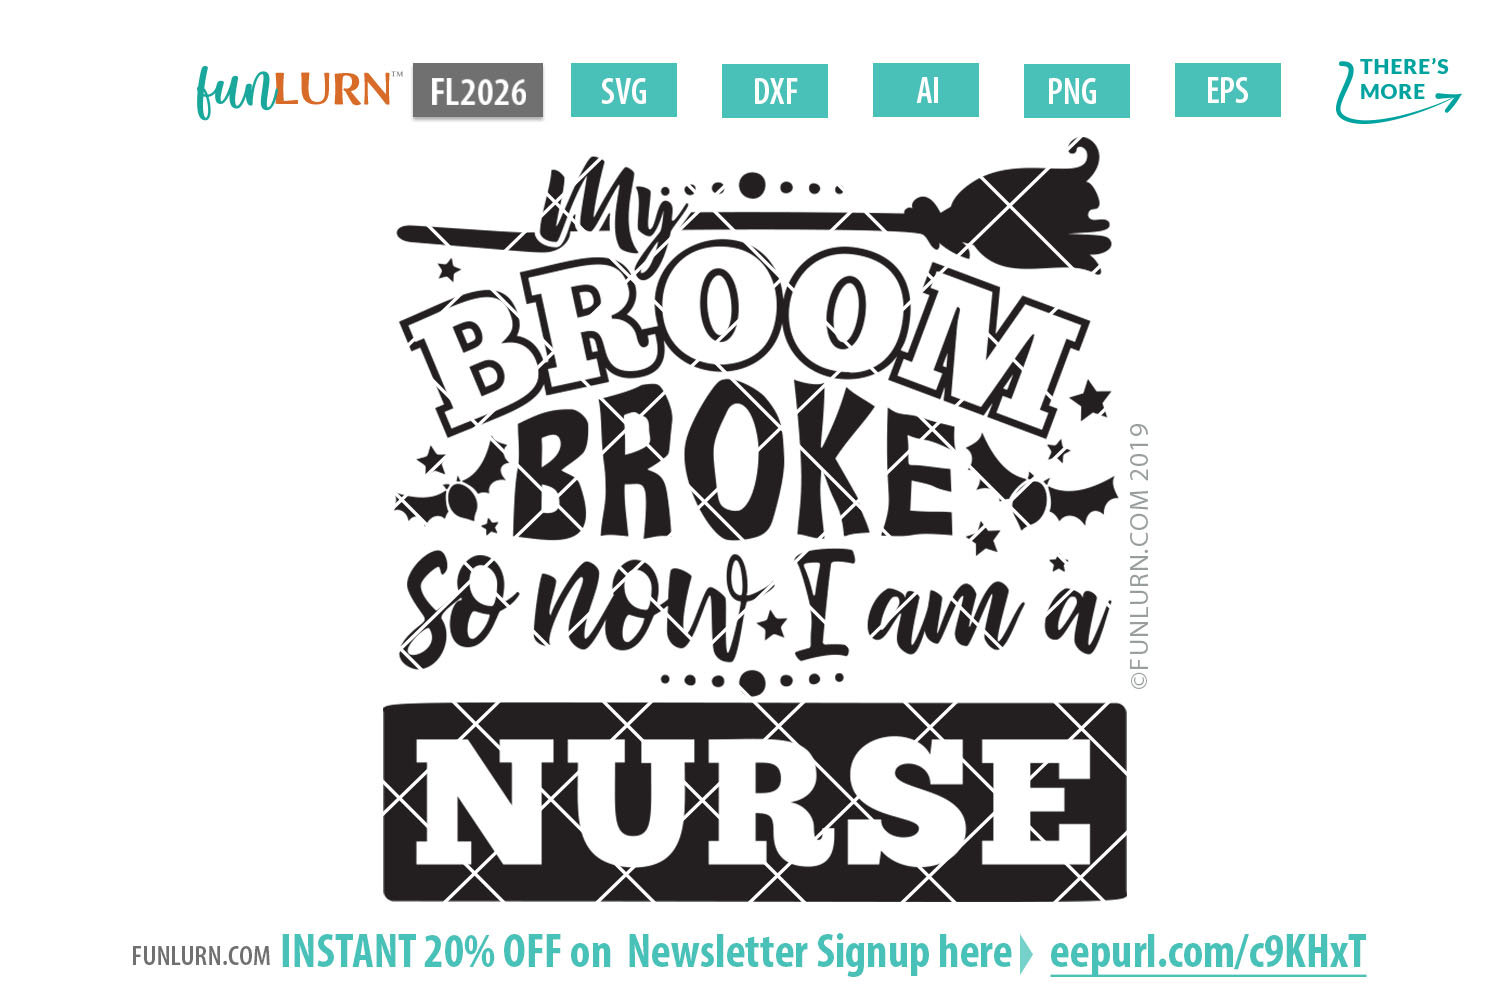 Download My broom broke so now I am a nurse - FunLurn